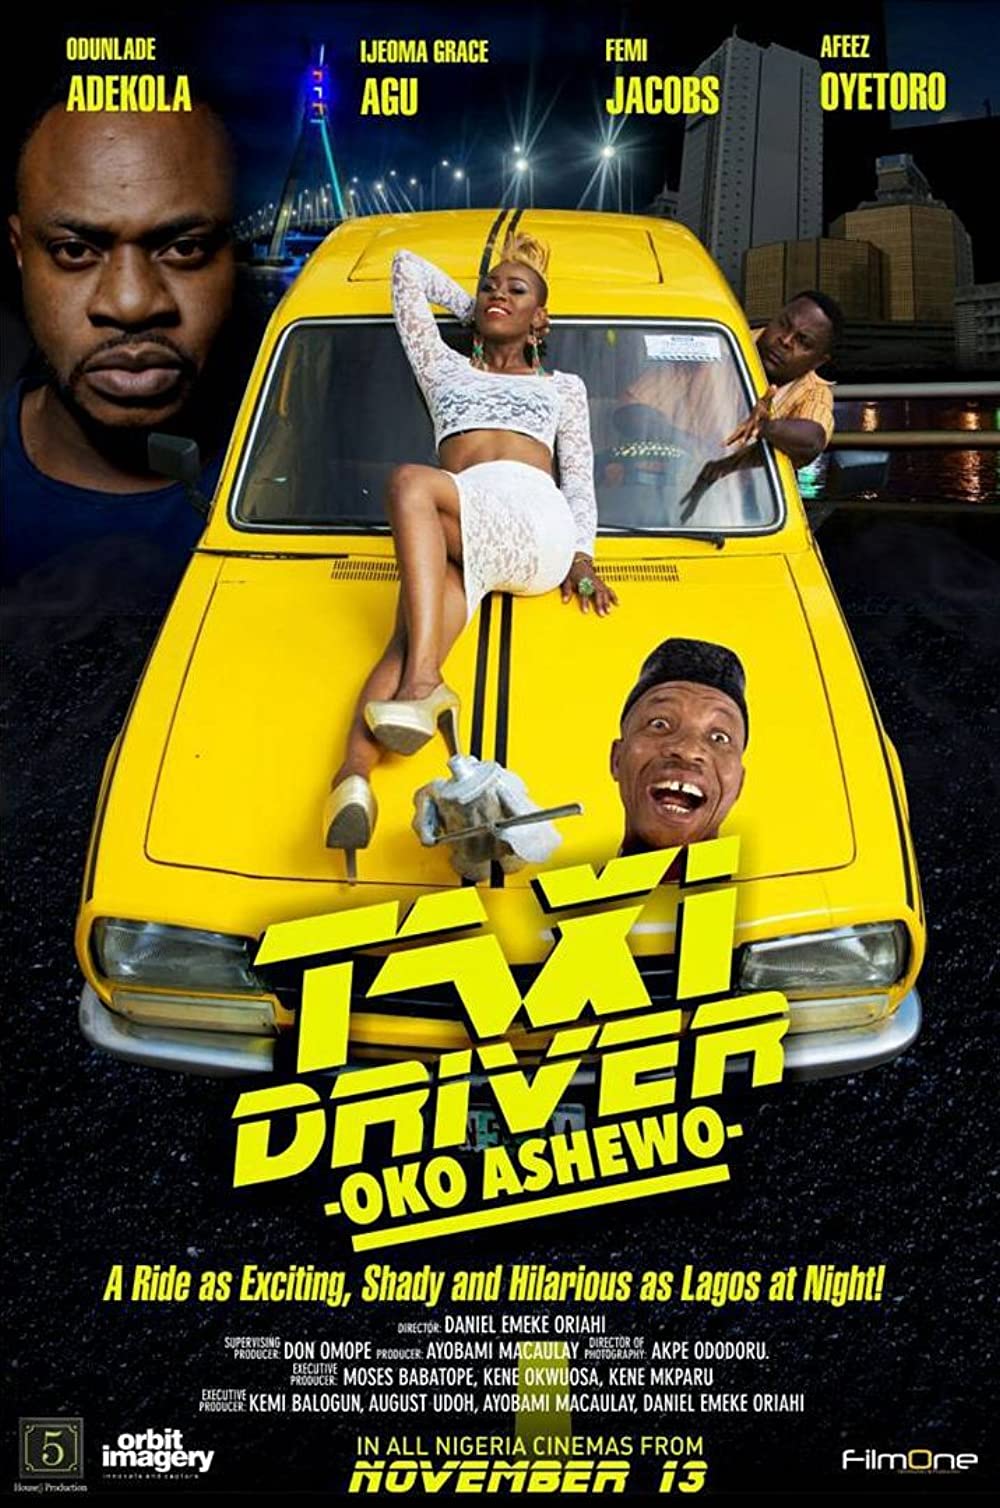 Taxi Driver Oko Ashewo 2015 movie poster